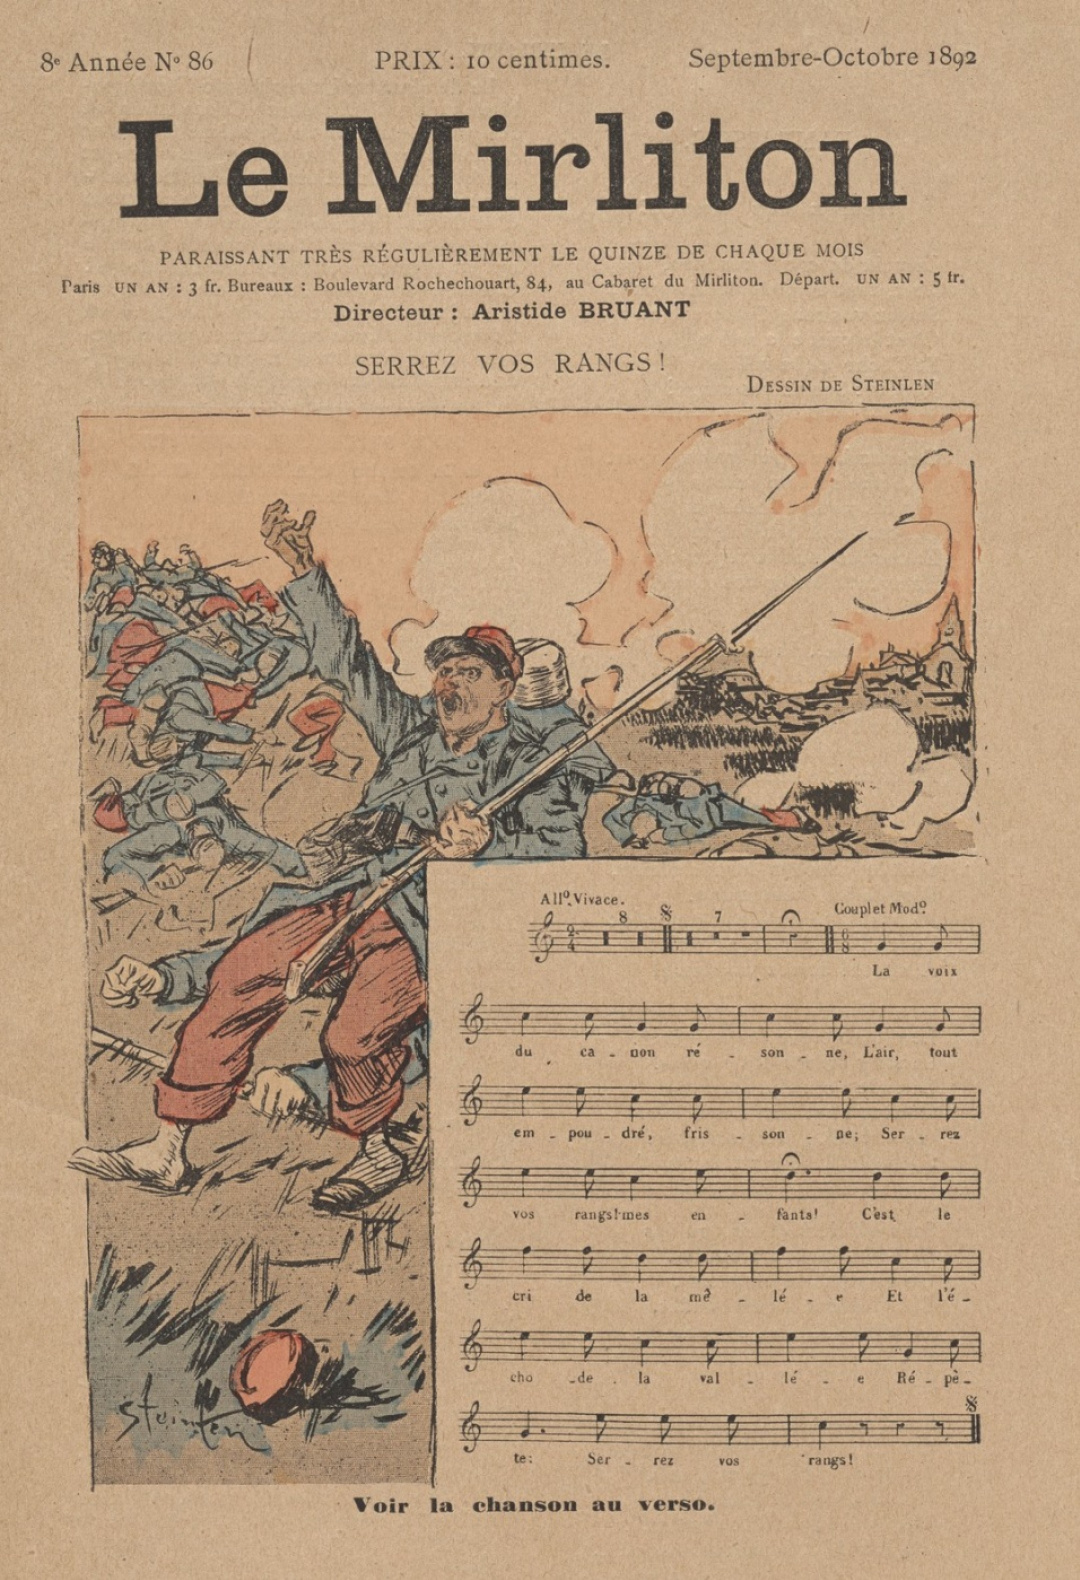 Theophile-Alexander Steinlen. Illustration for the magazine "Mirliton" No. 86, September-October 1892